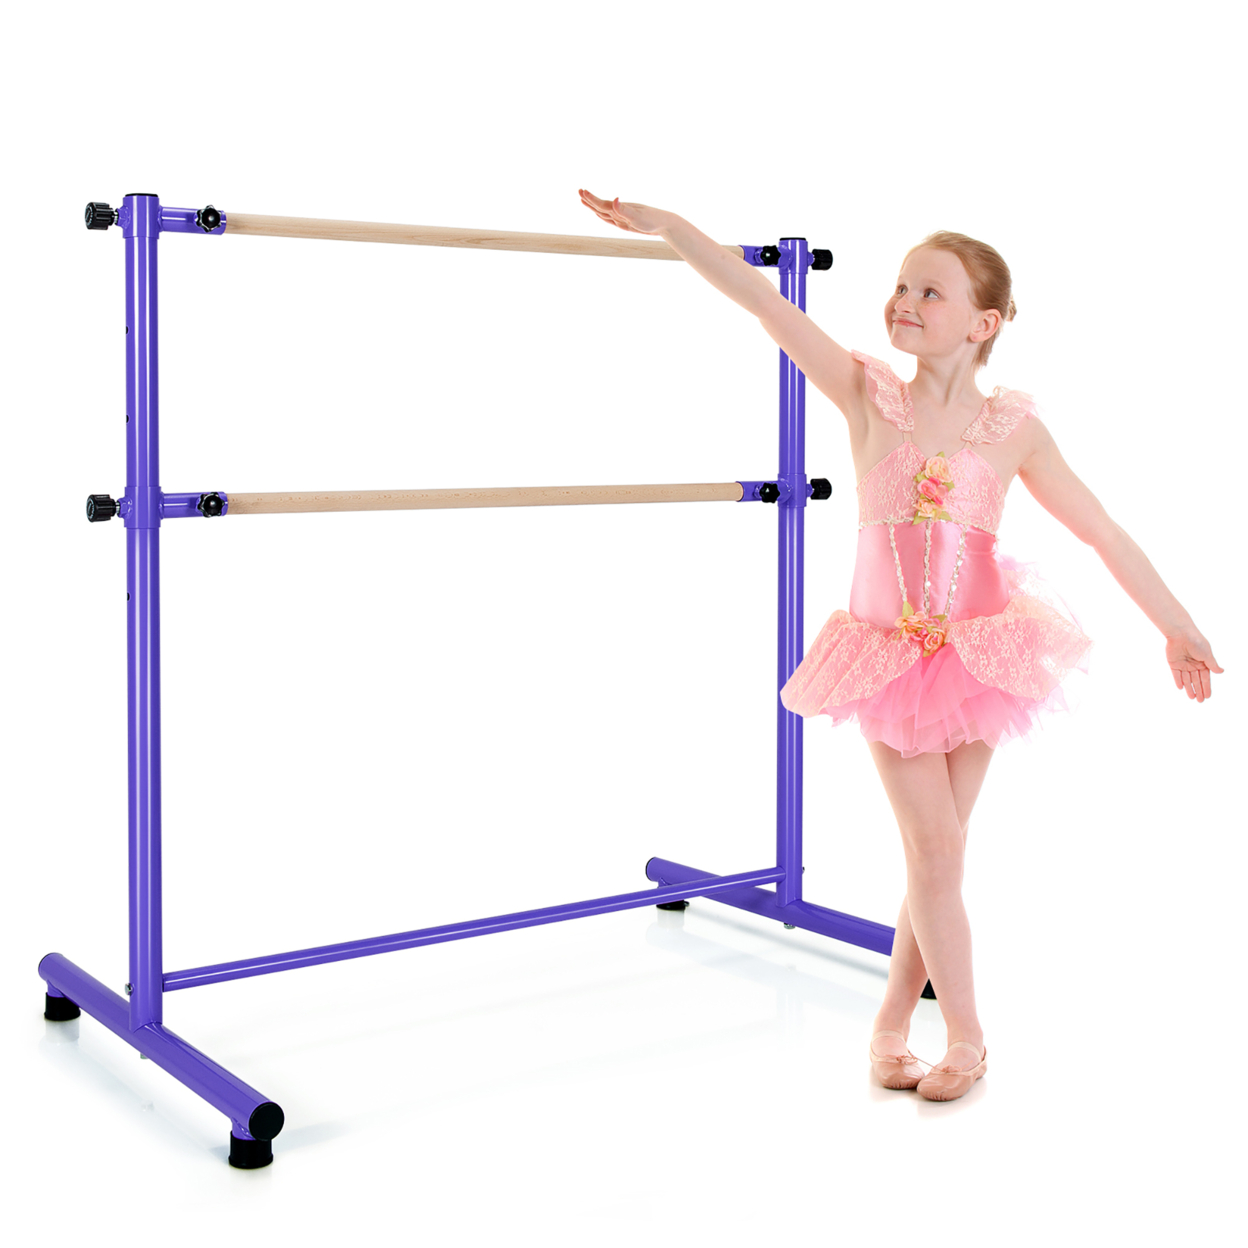 Portable 4FT Freestanding Double Dancing Ballet Barre Bar W/ 5 Adjustable Heights - Purple